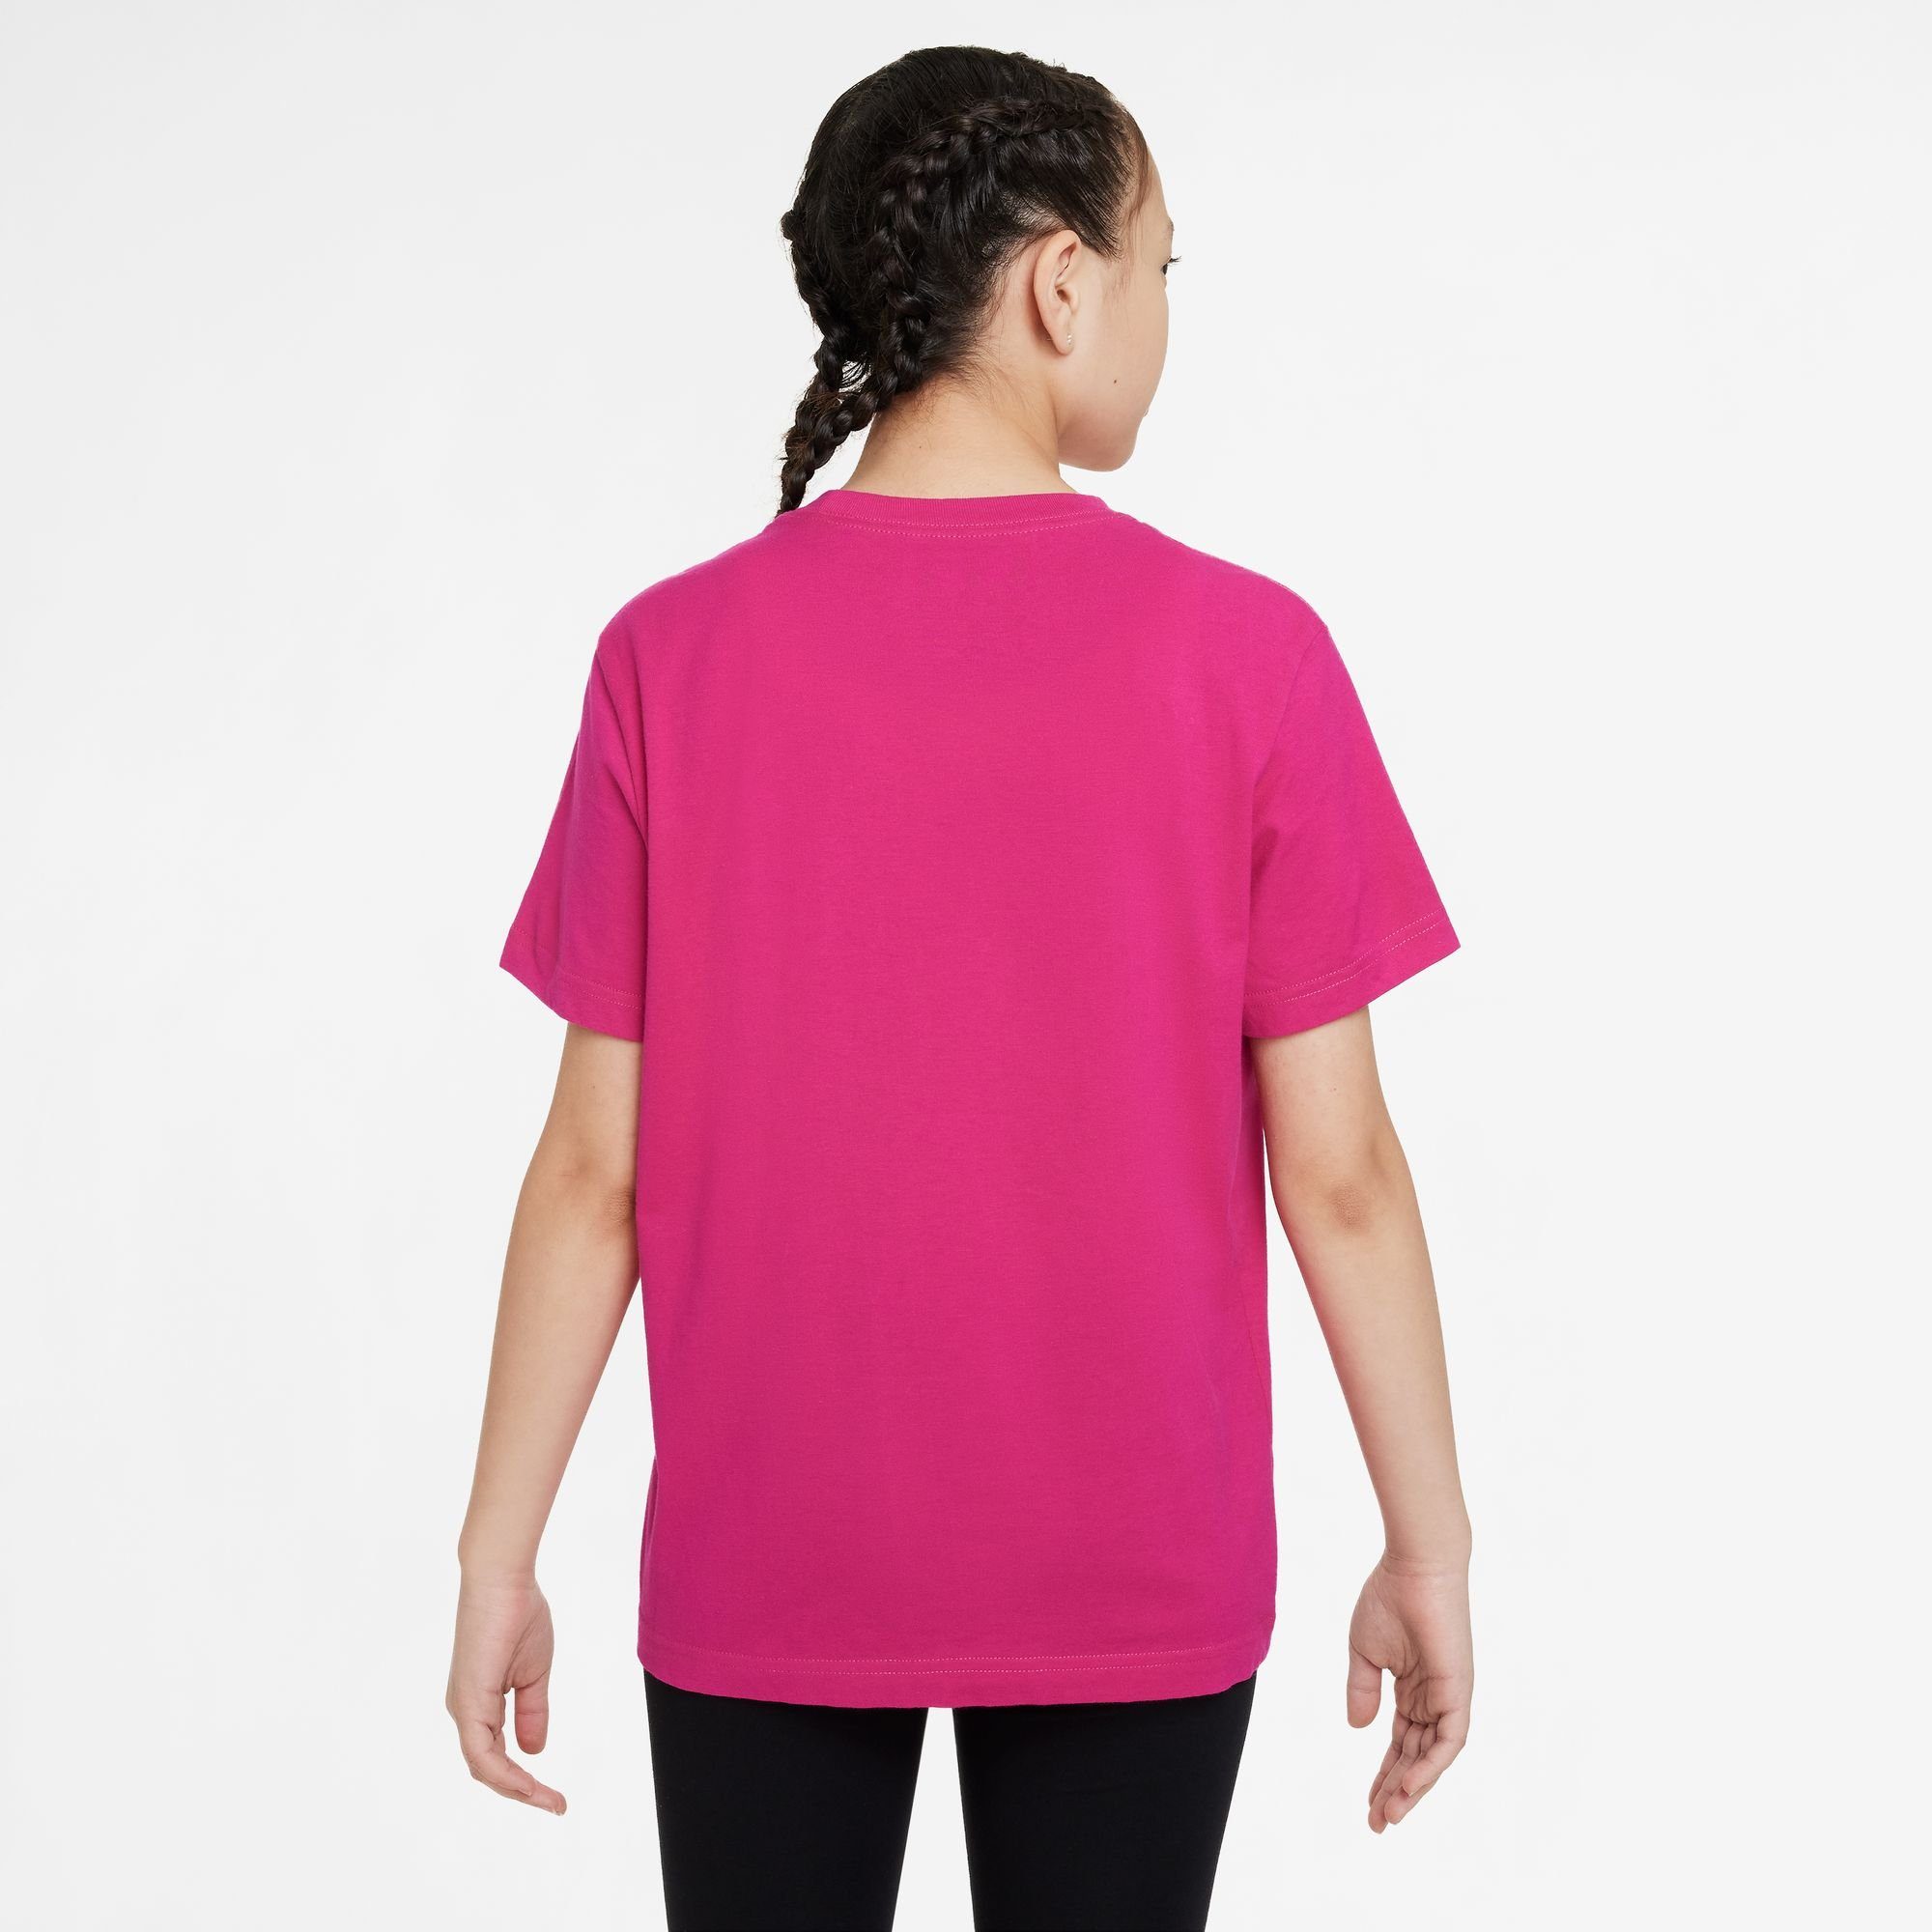 Nike Sportswear T-Shirt BIG FIREBERRY (GIRLS) T-SHIRT KIDS'